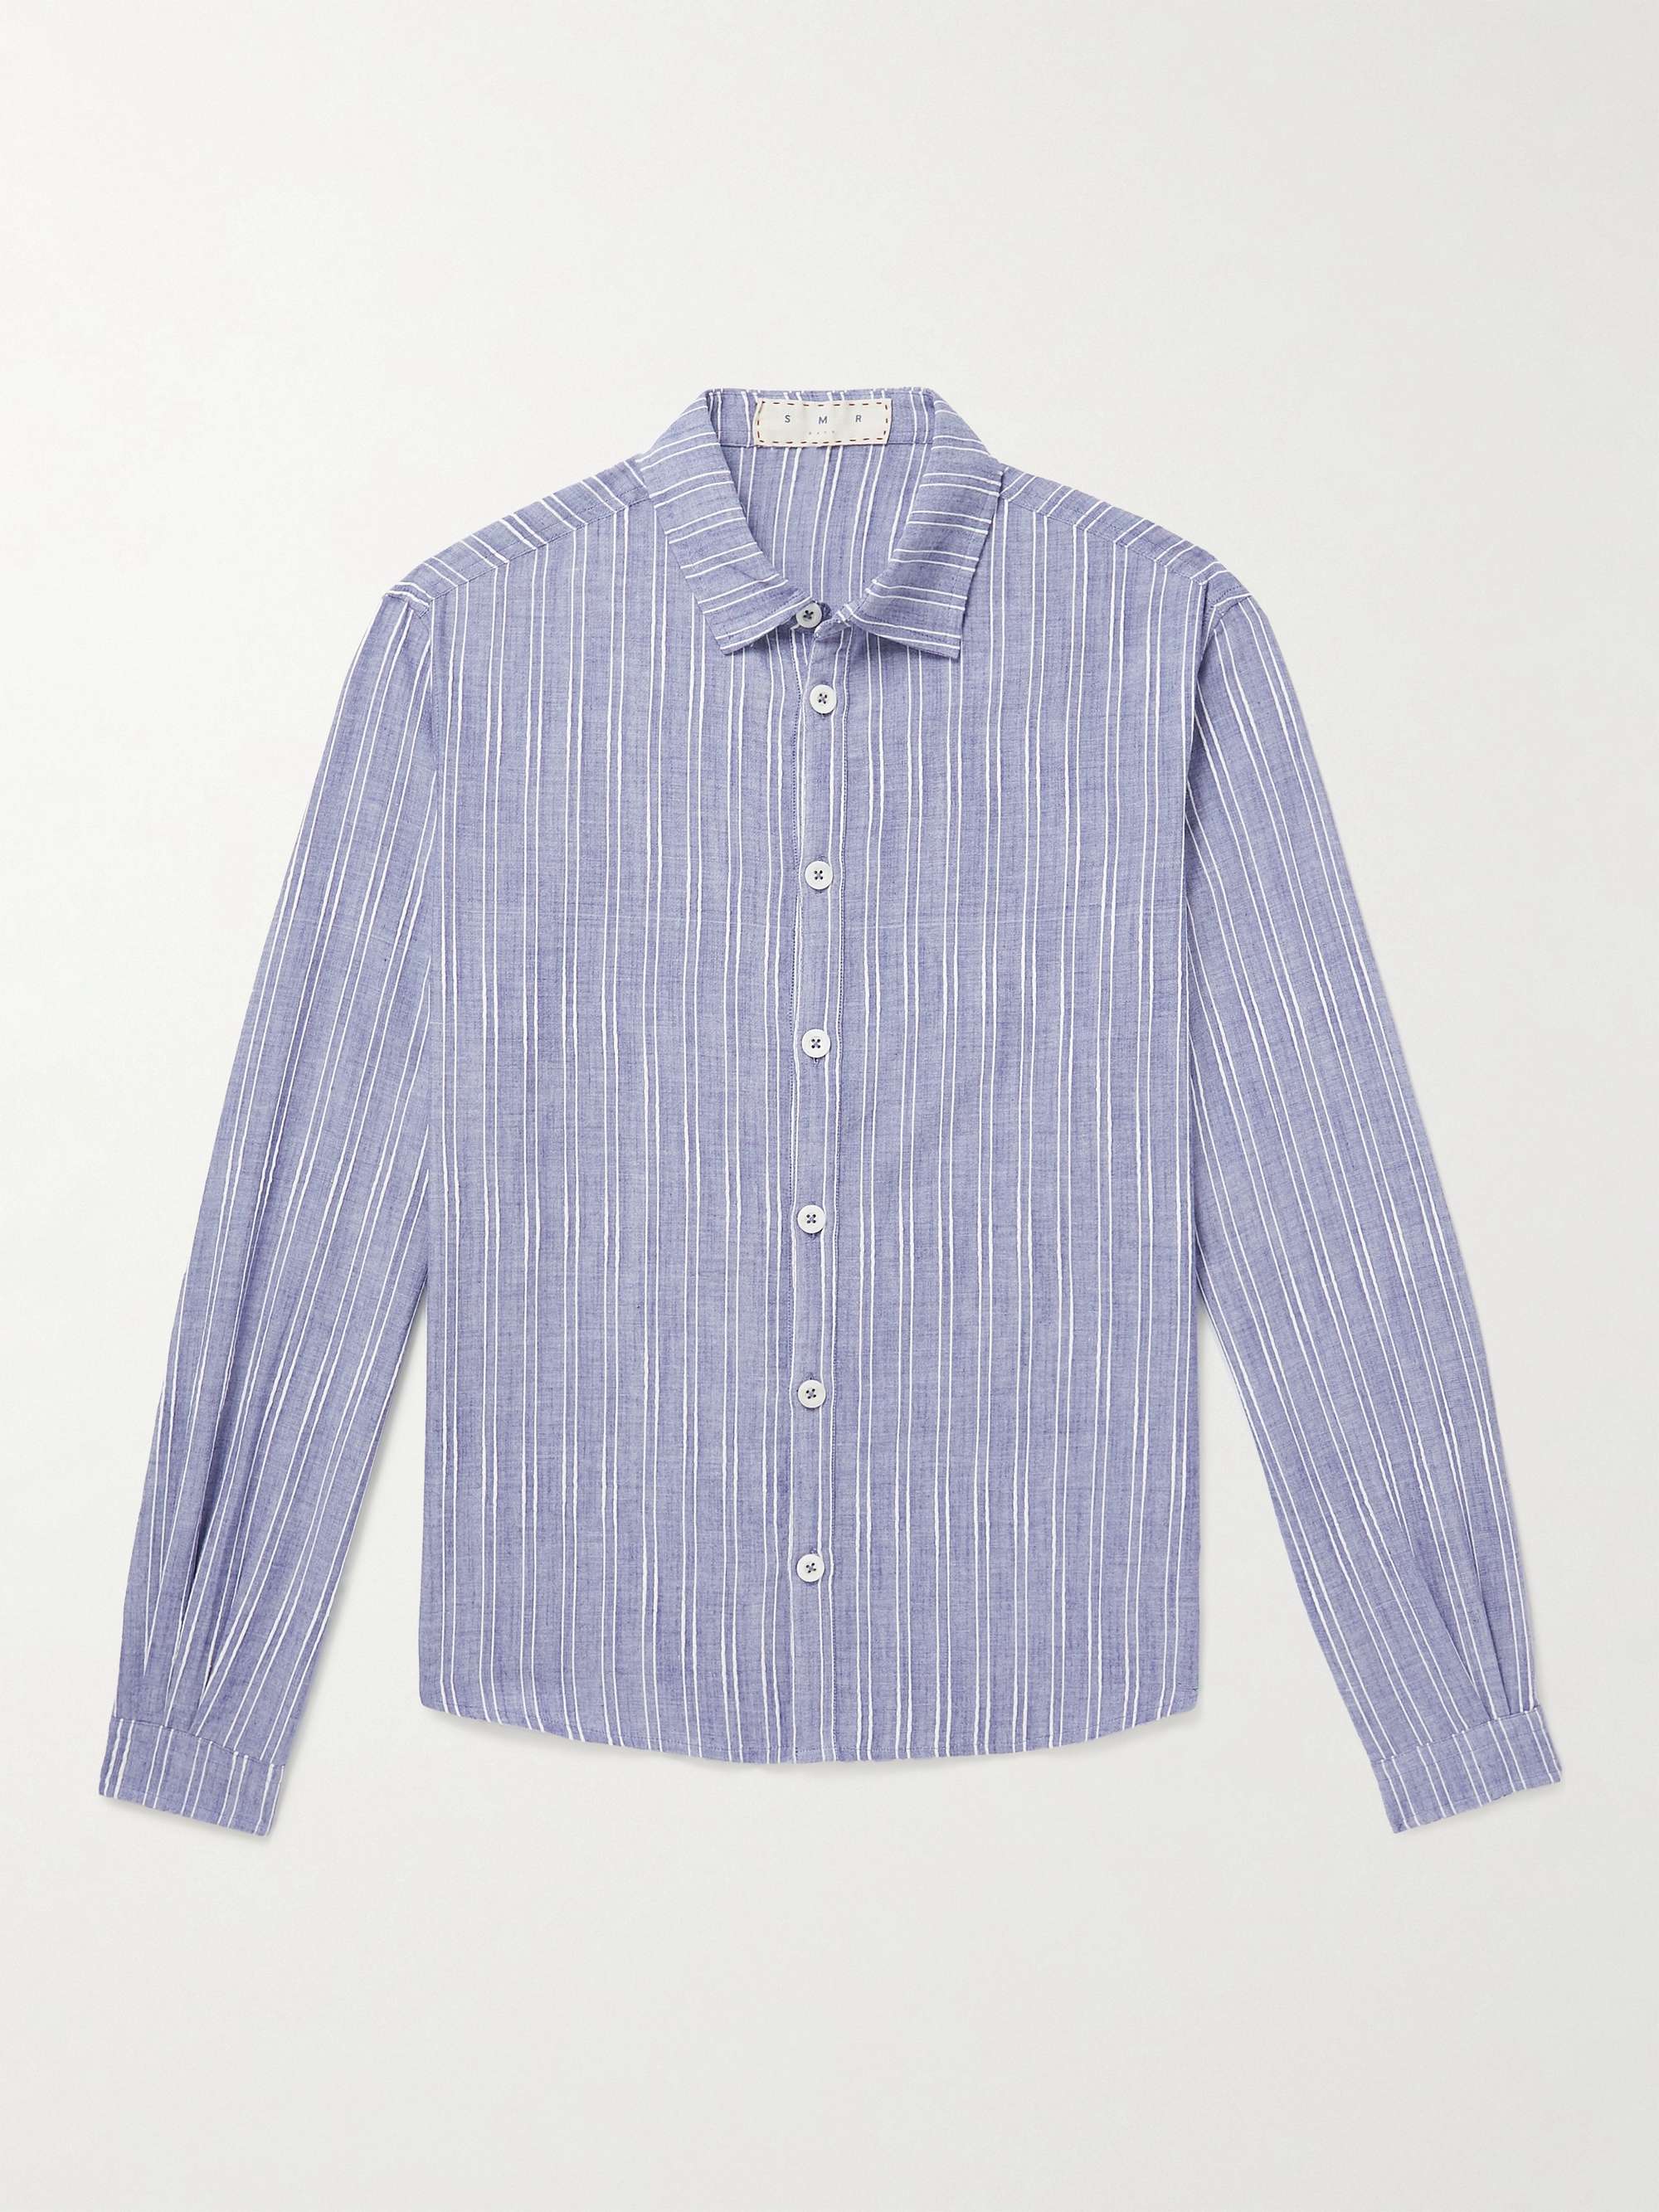 SMR DAYS Holbox Striped Cotton-Voile Shirt